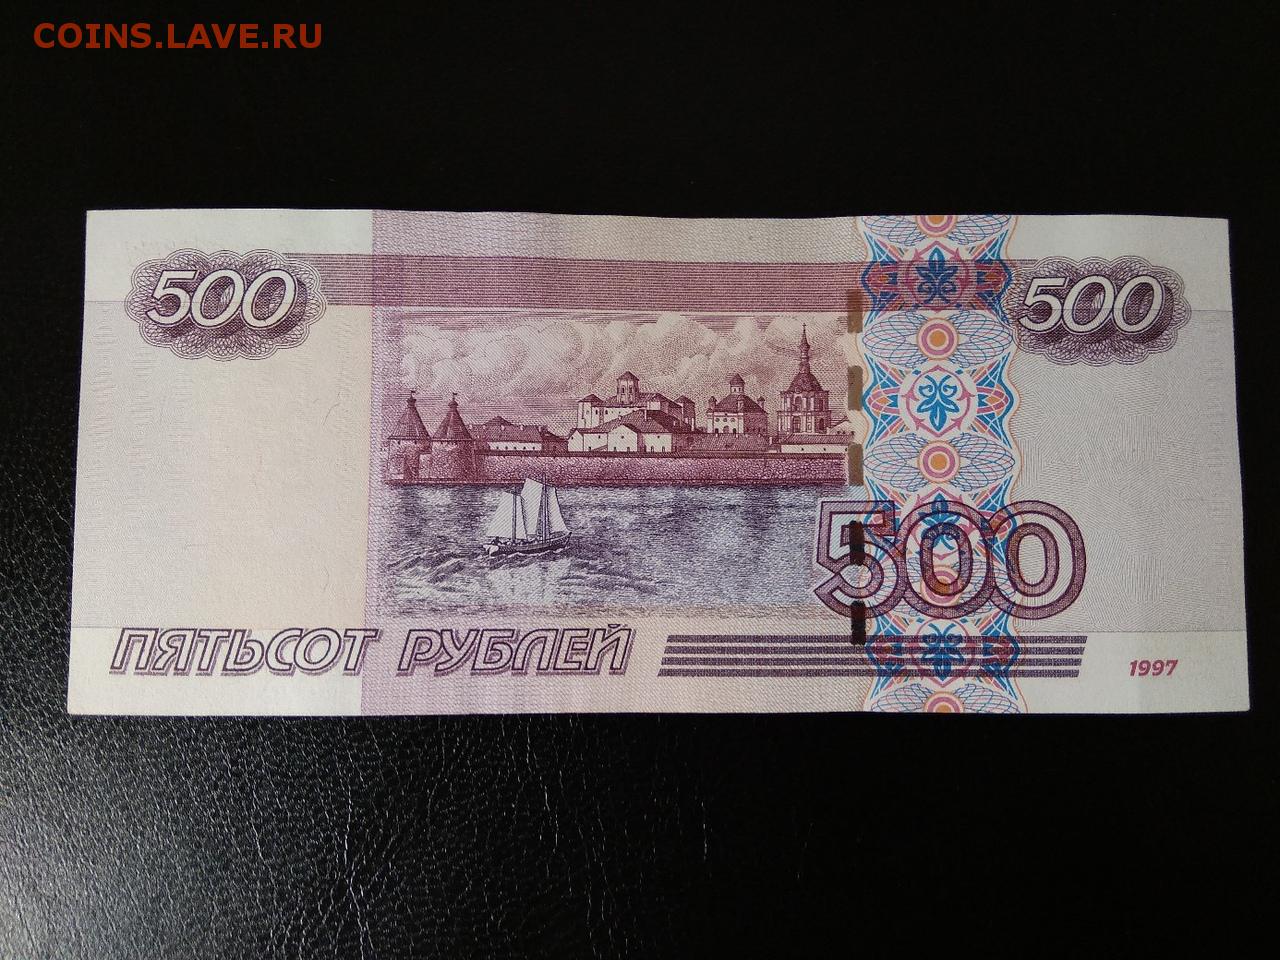 500 рублей 2004. 500 Рублей 1997 (модификация 2004 года). 500 Рублей 2004 года. 500 Рублей модификация 2004. 500 Рублей модификации.